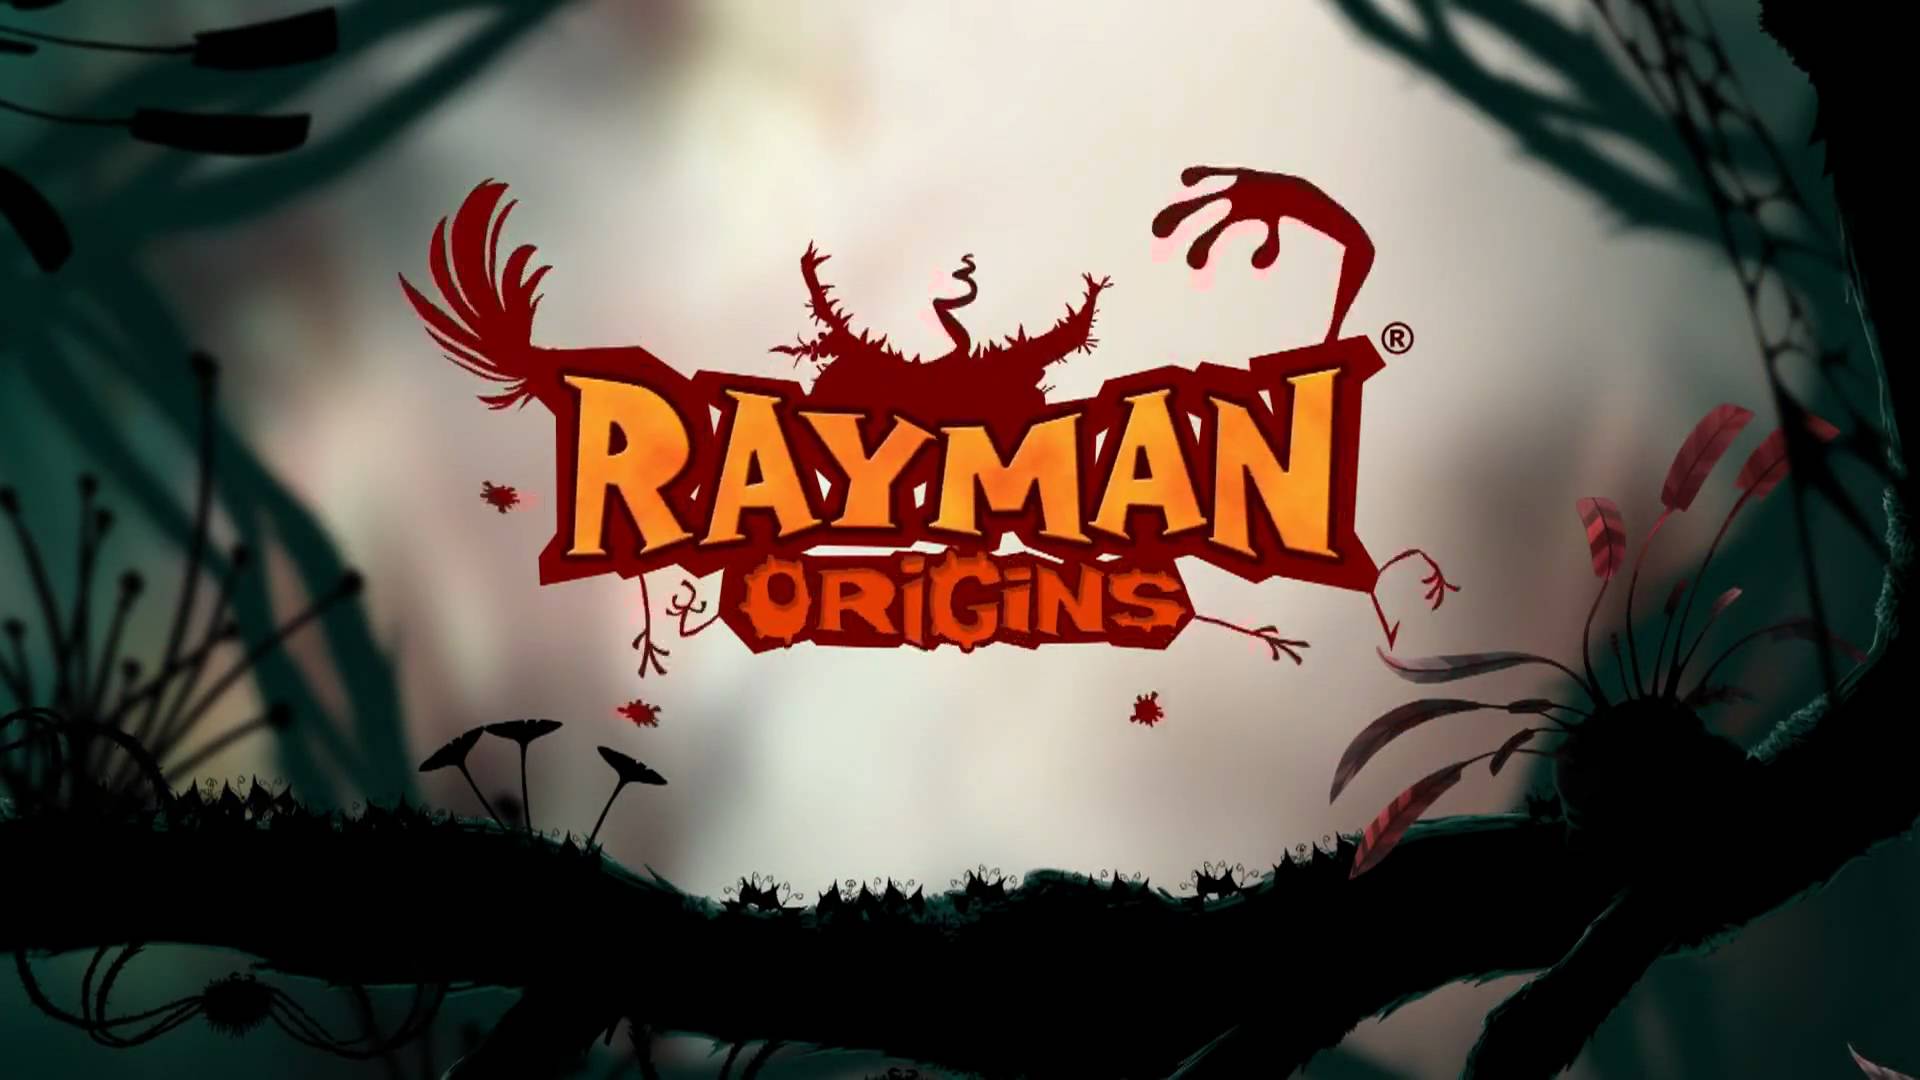 Rayman Origins gratis grazie a Ubi 30